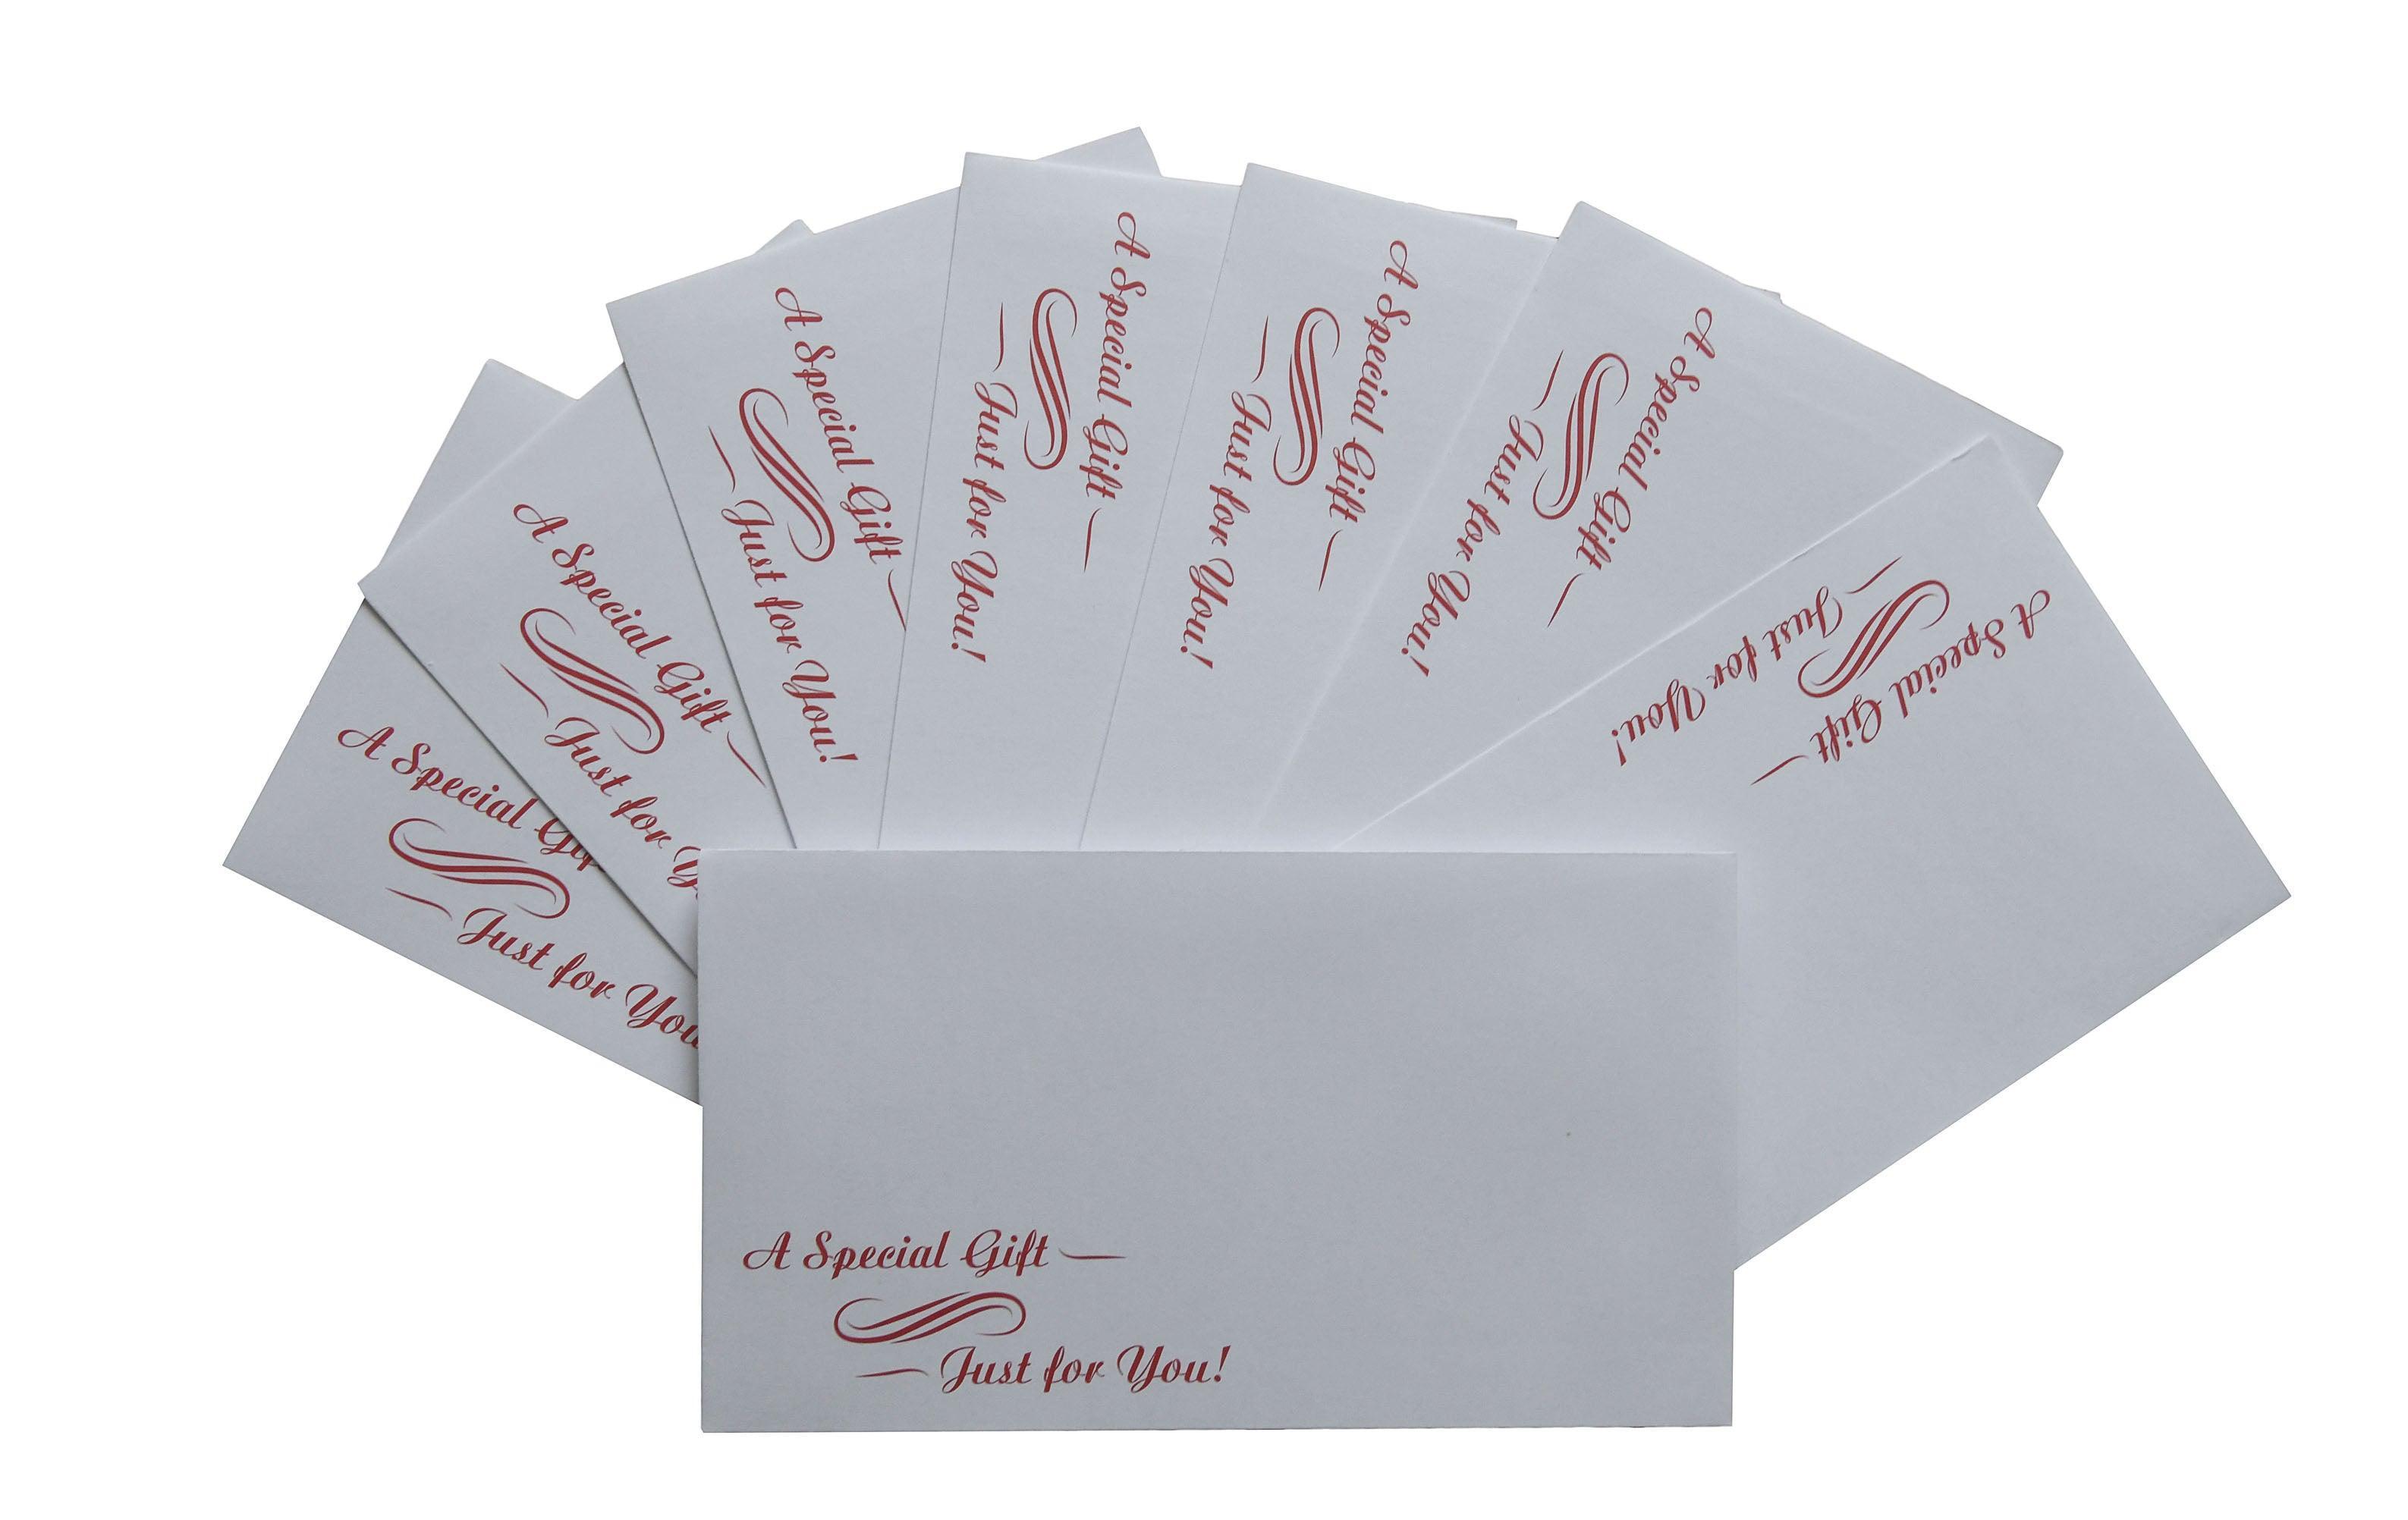 Cash Envelopes (3.75 x 6.75) - 50 Qty | Perfect The Holidays, Birthdays, Graduations, Company Bonuses, Gifts, Money and More! - SJPrinter 